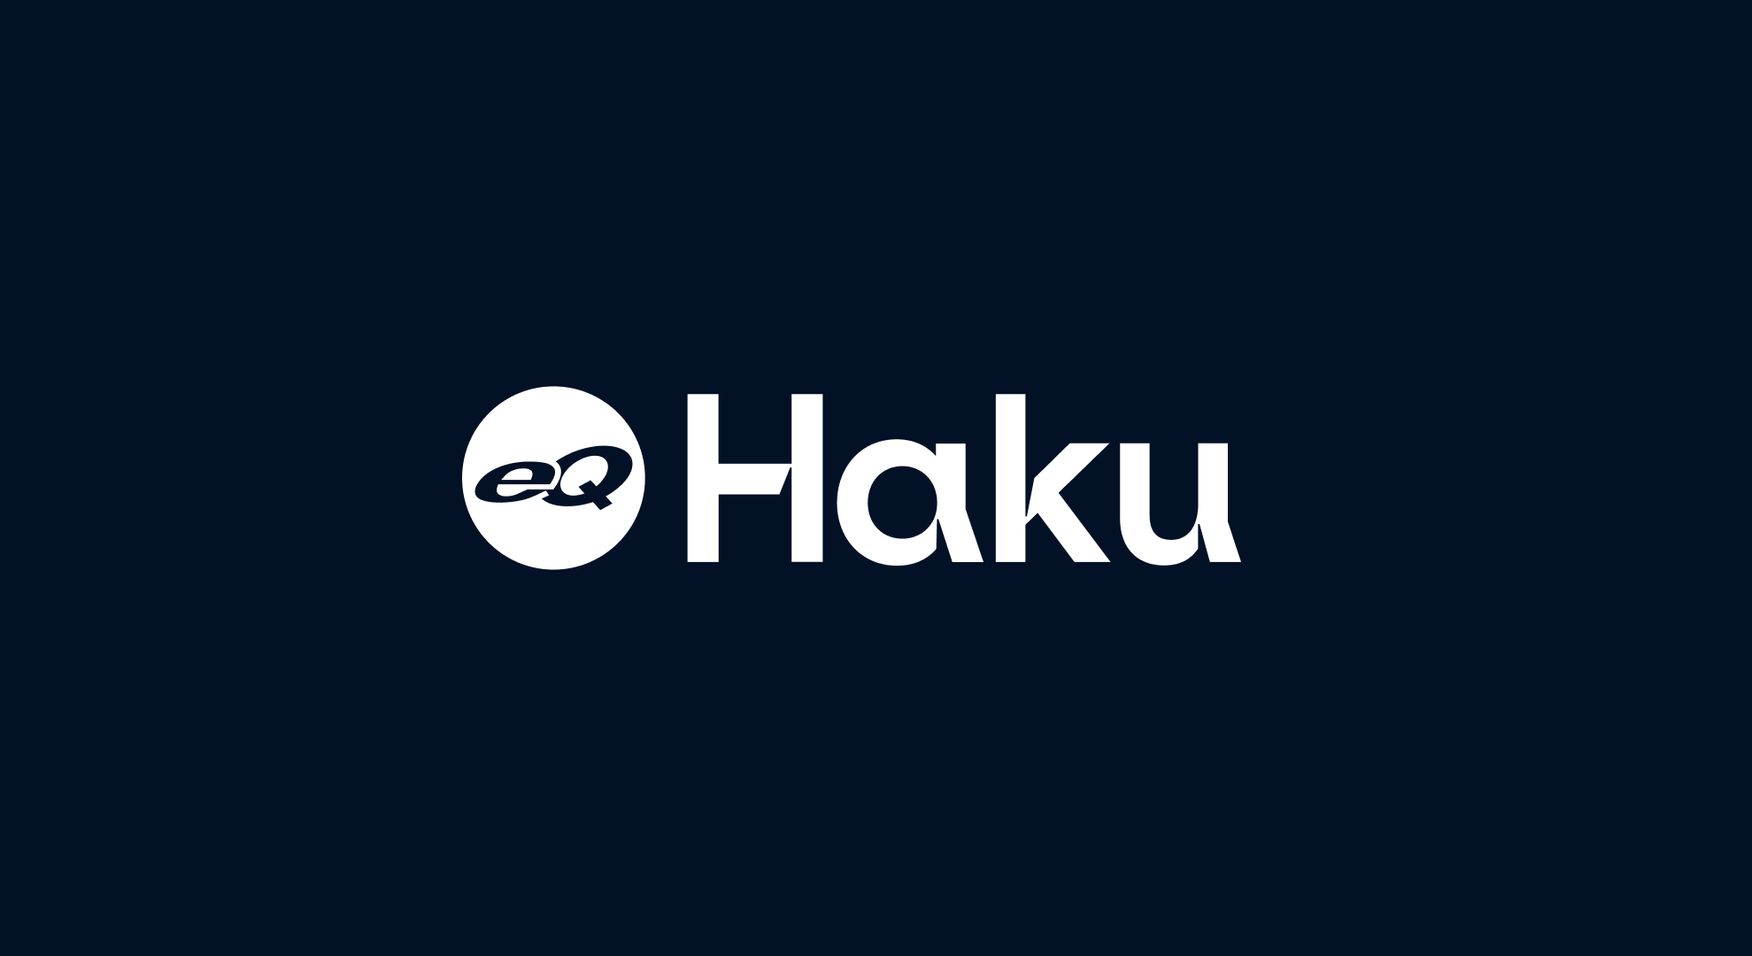 The EQ Haku logo in white on black background. "EQ" is encapsulated in a circle, "Haku" is written in custom font.